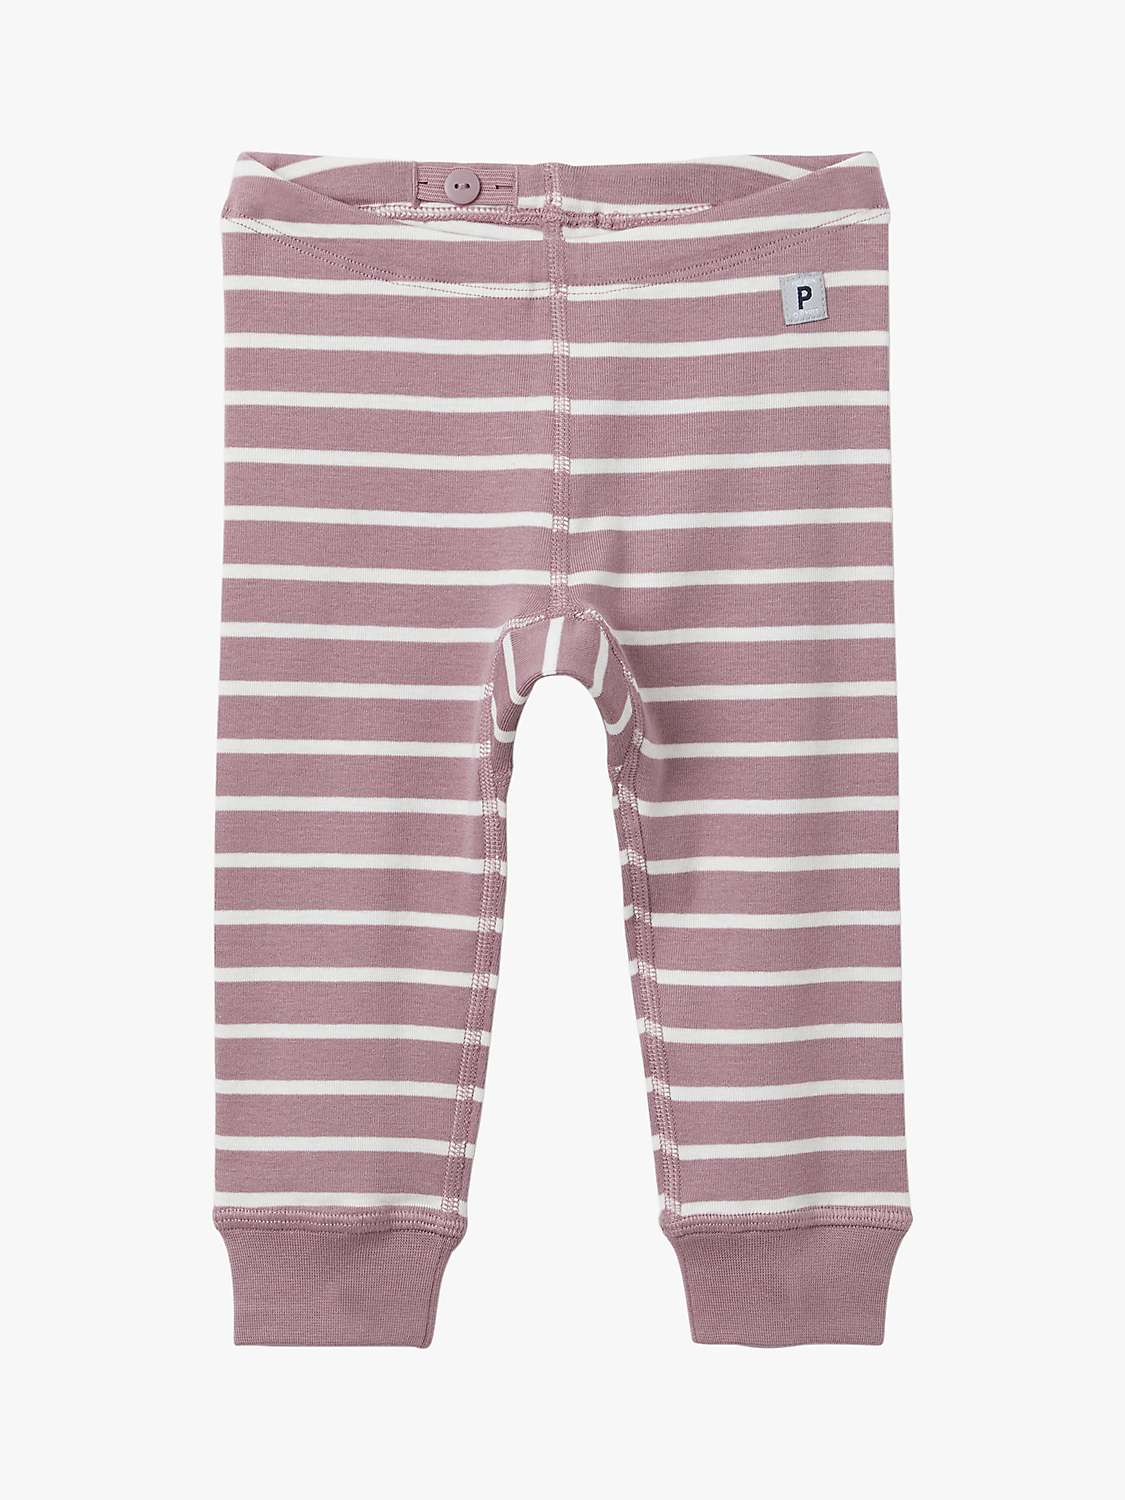 Buy Polarn O. Pyret Baby GOTS Organic Cotton Stripe Leggings Online at johnlewis.com